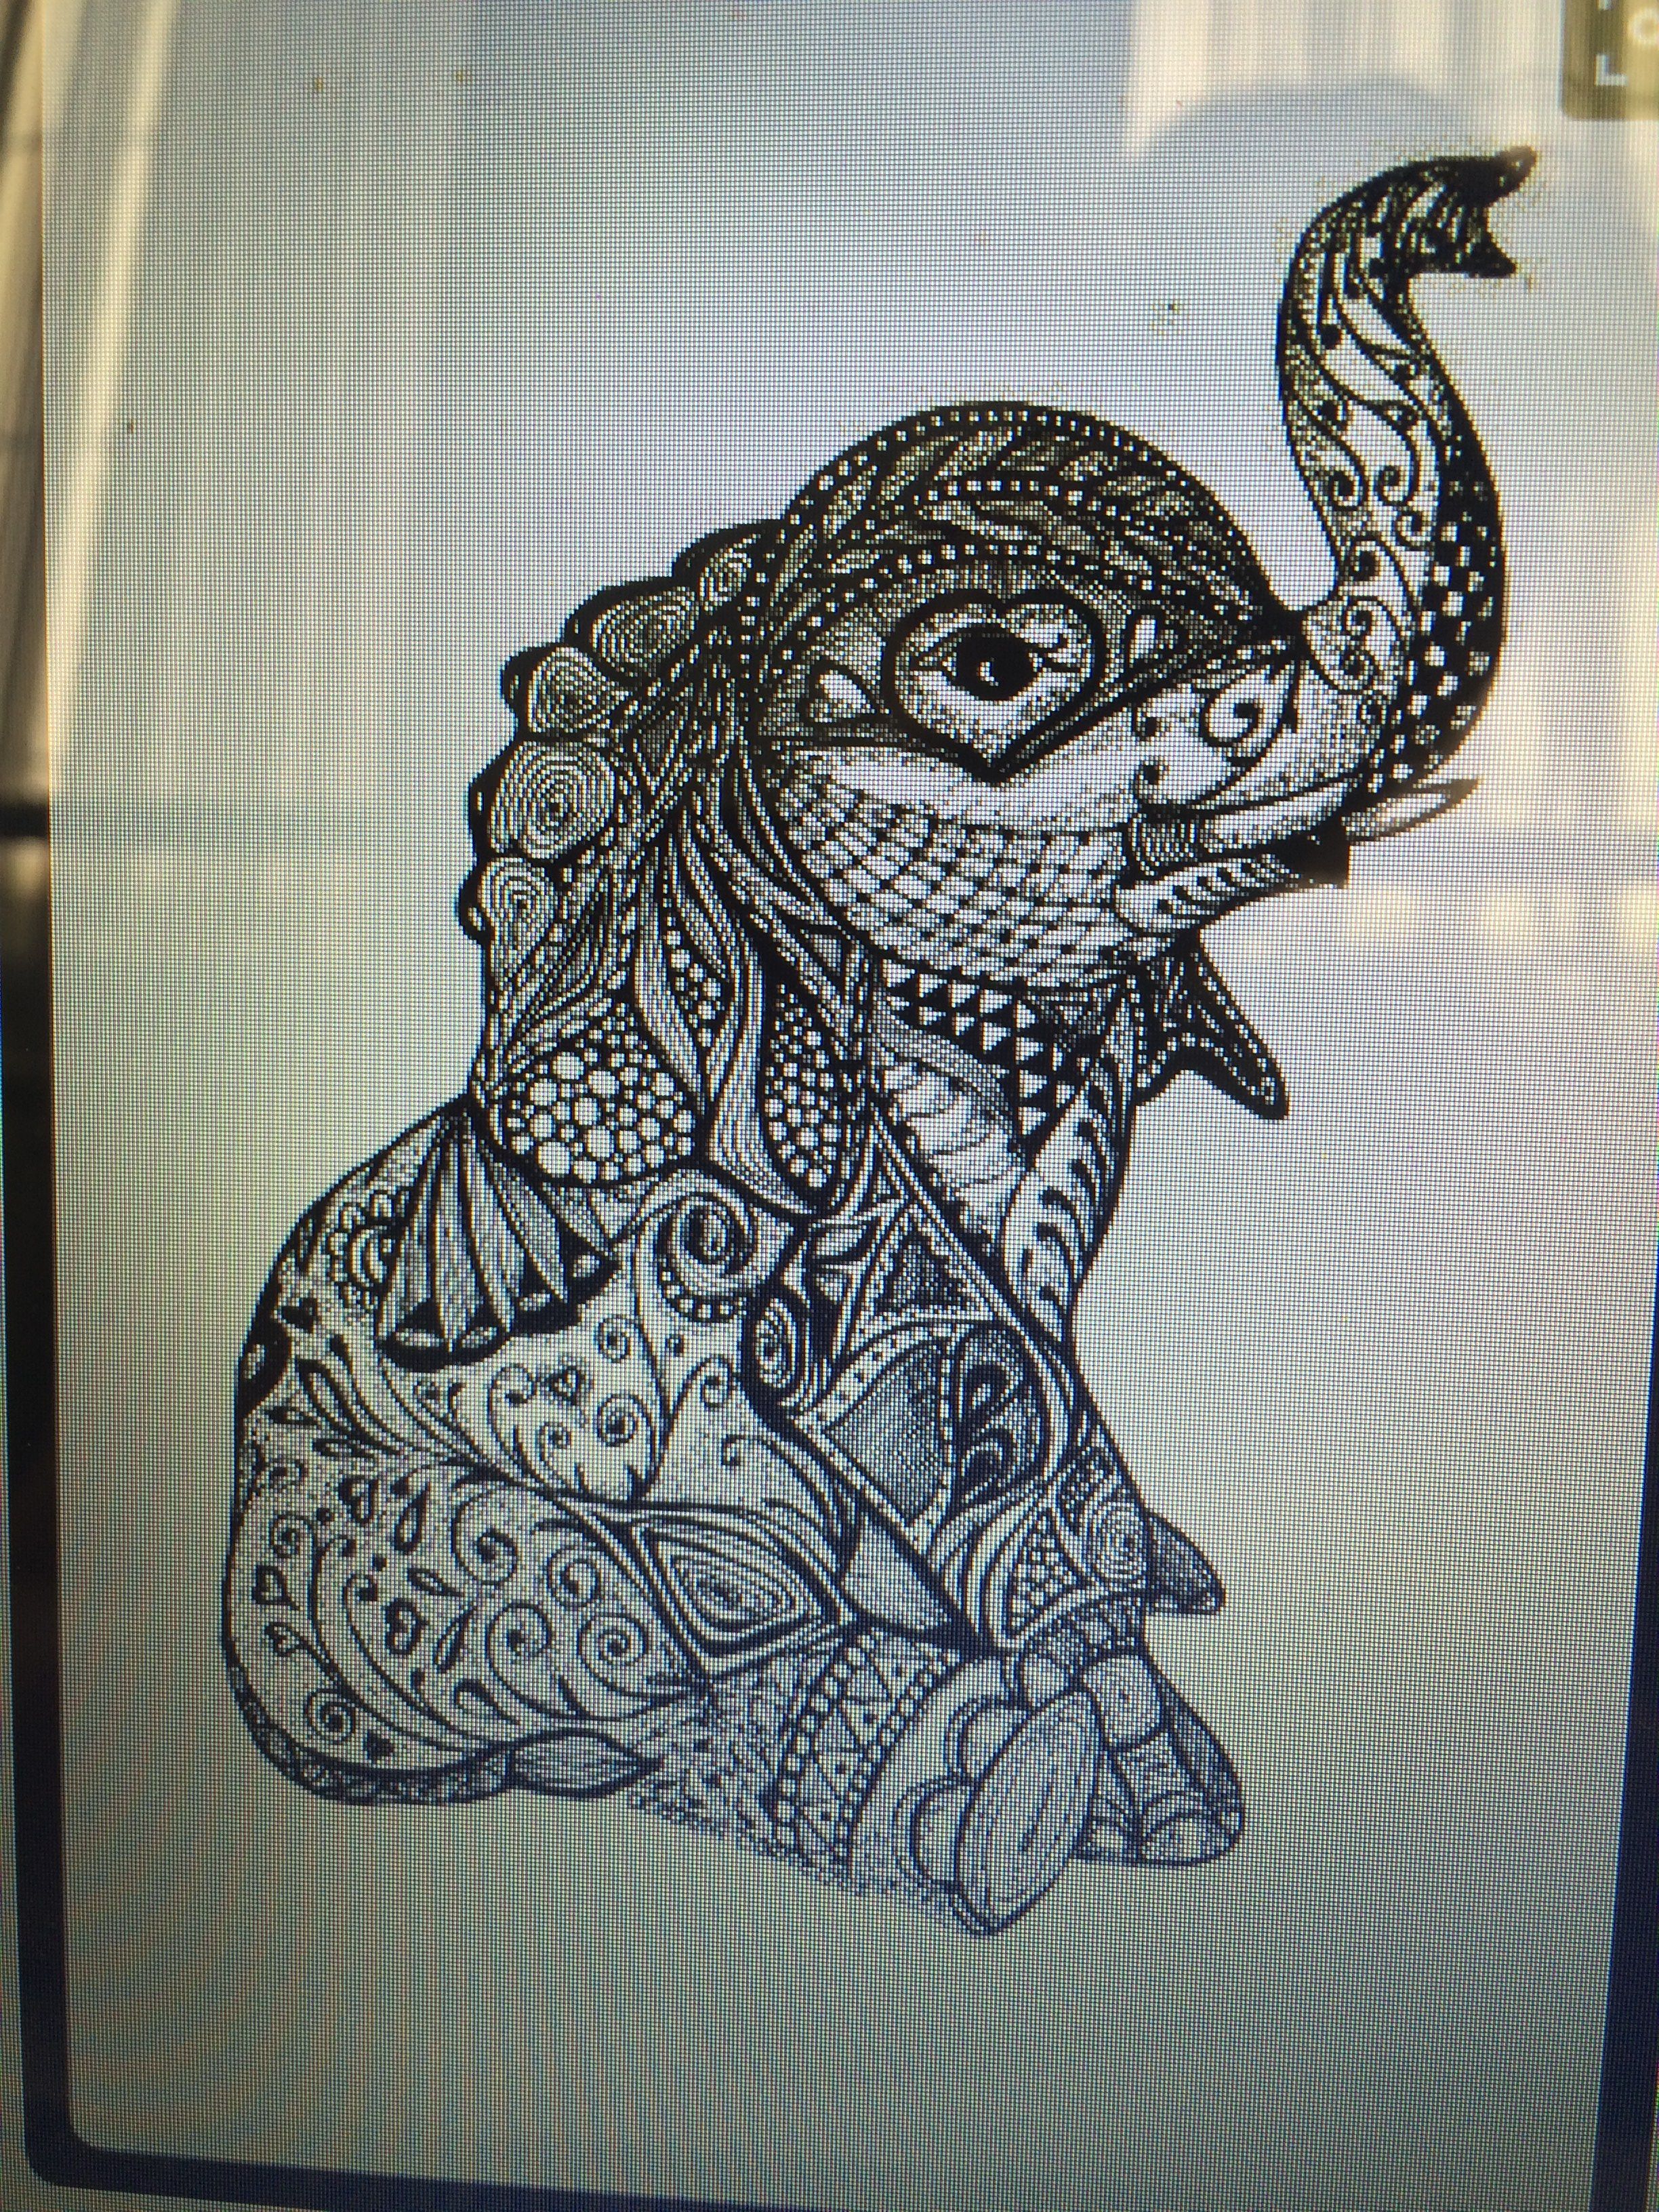 Cute mandala tattoo design of an elephant! Love it!